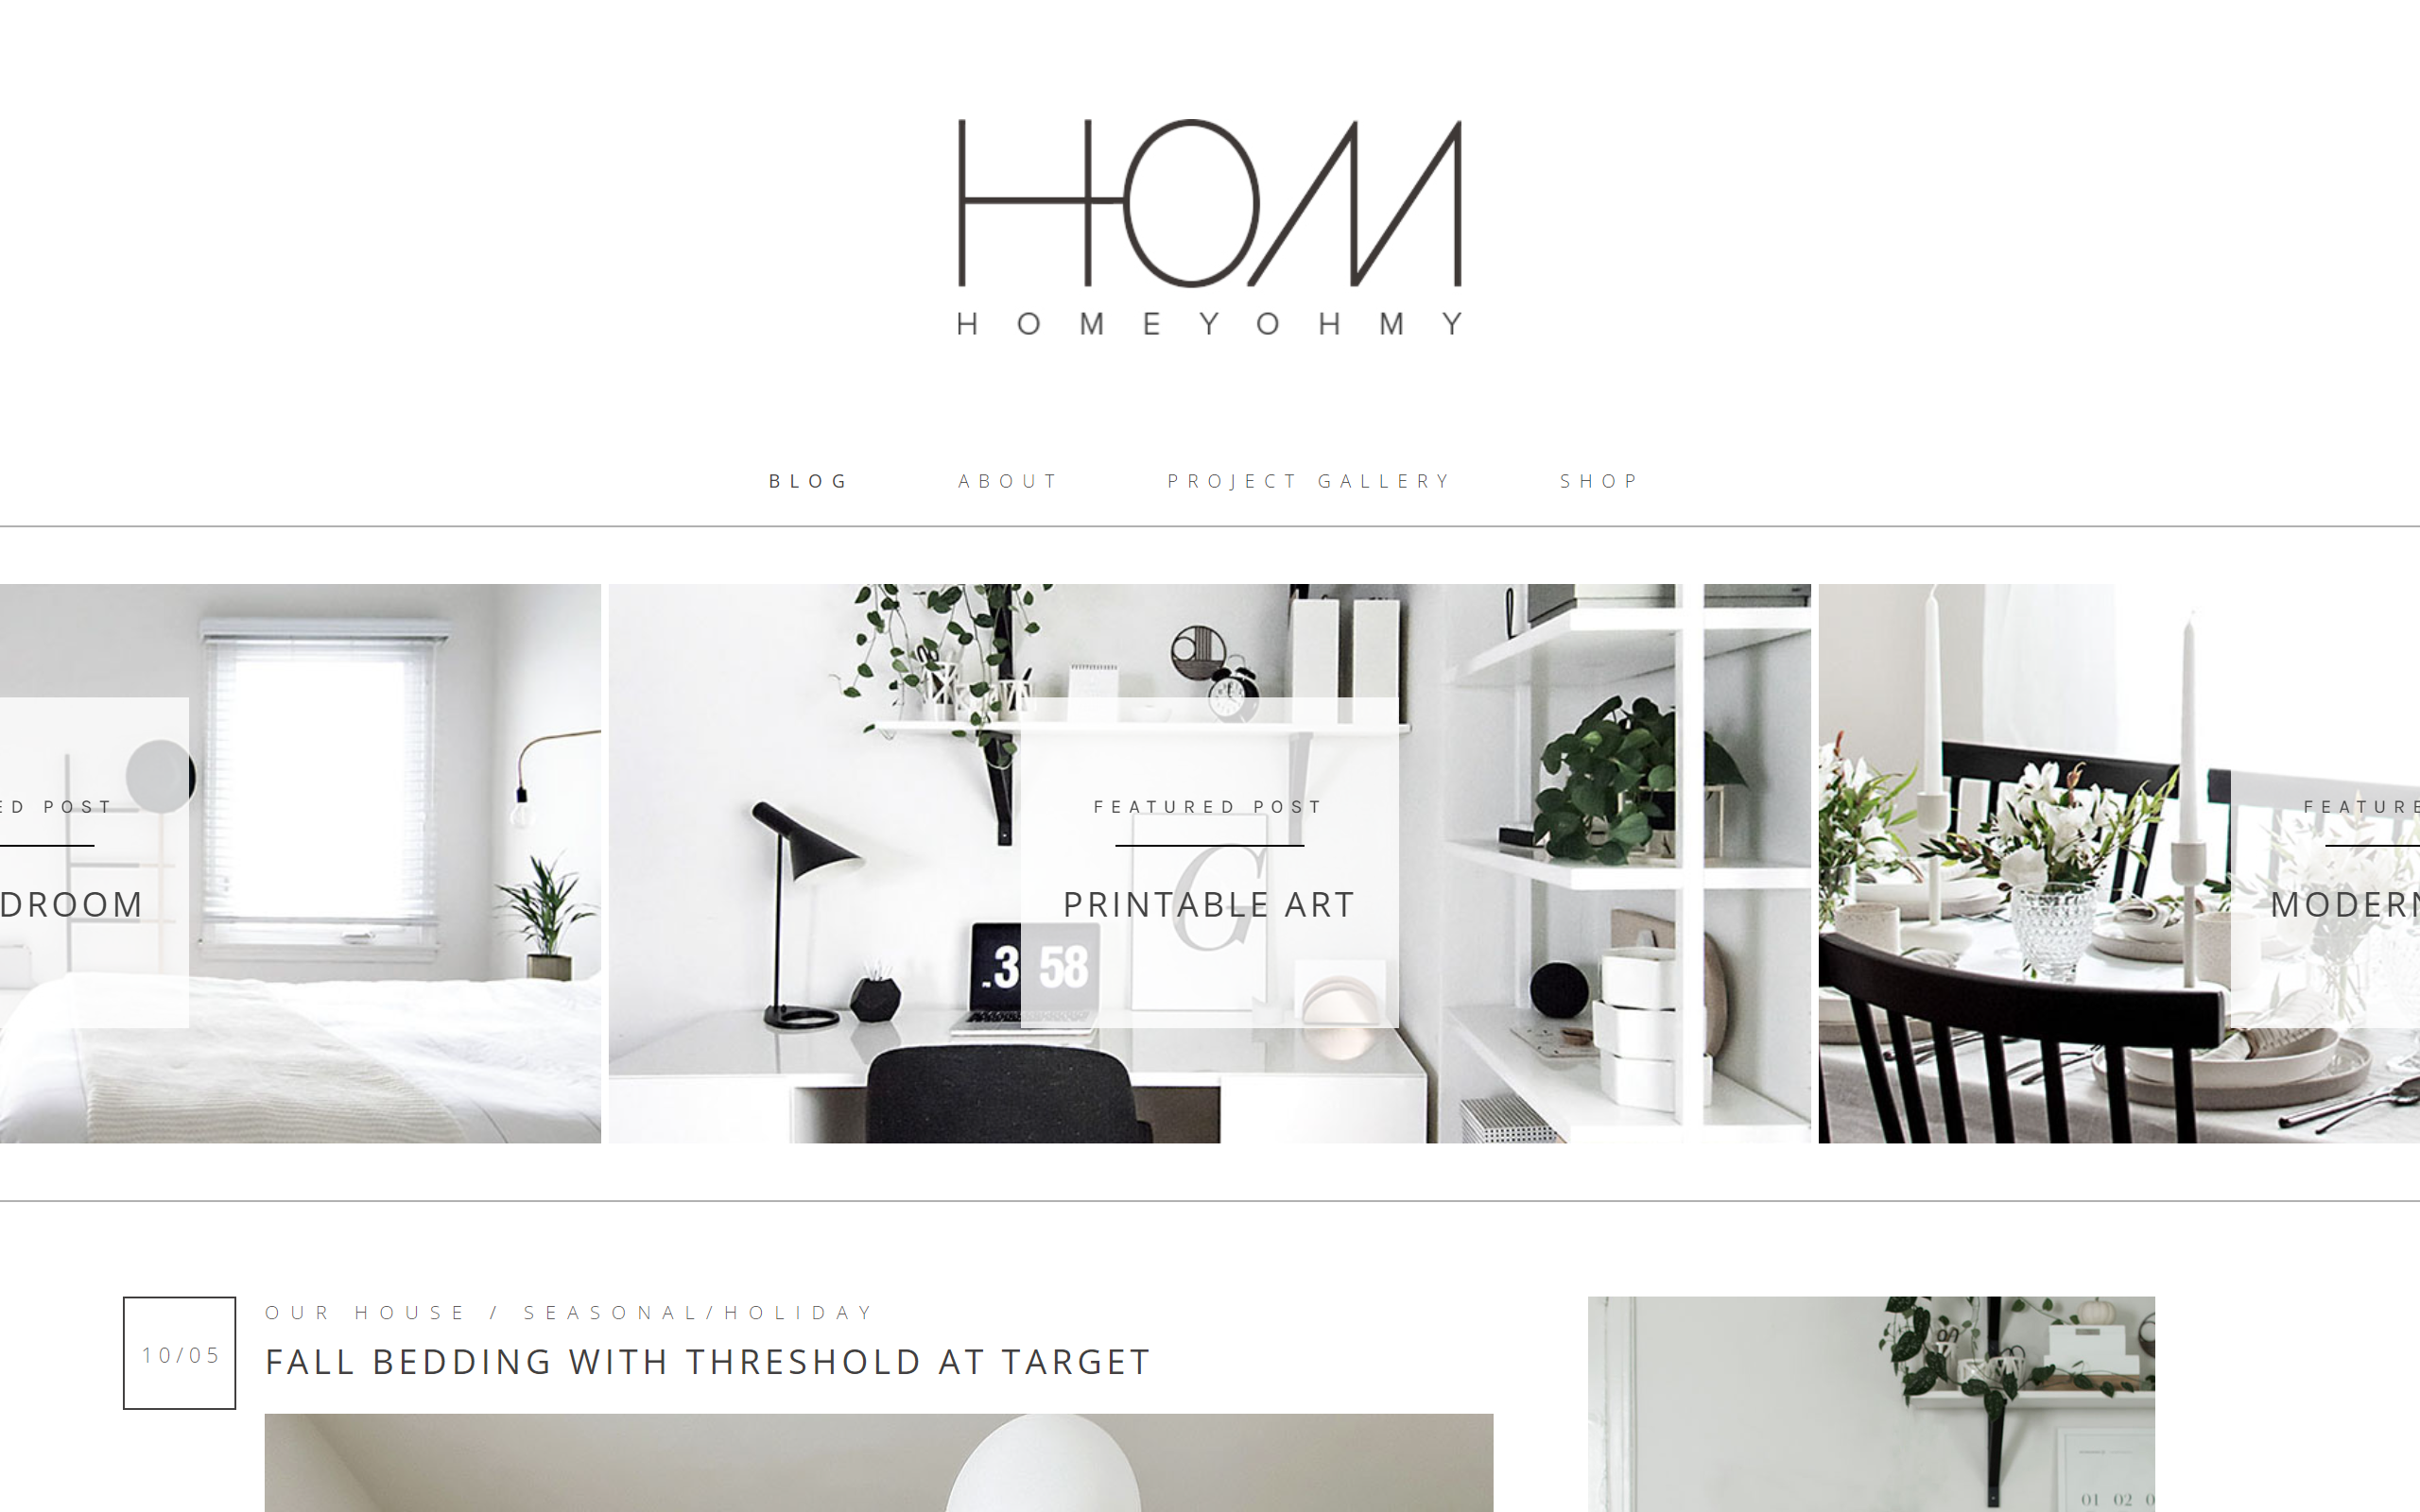 Homey Oh My interior design blog